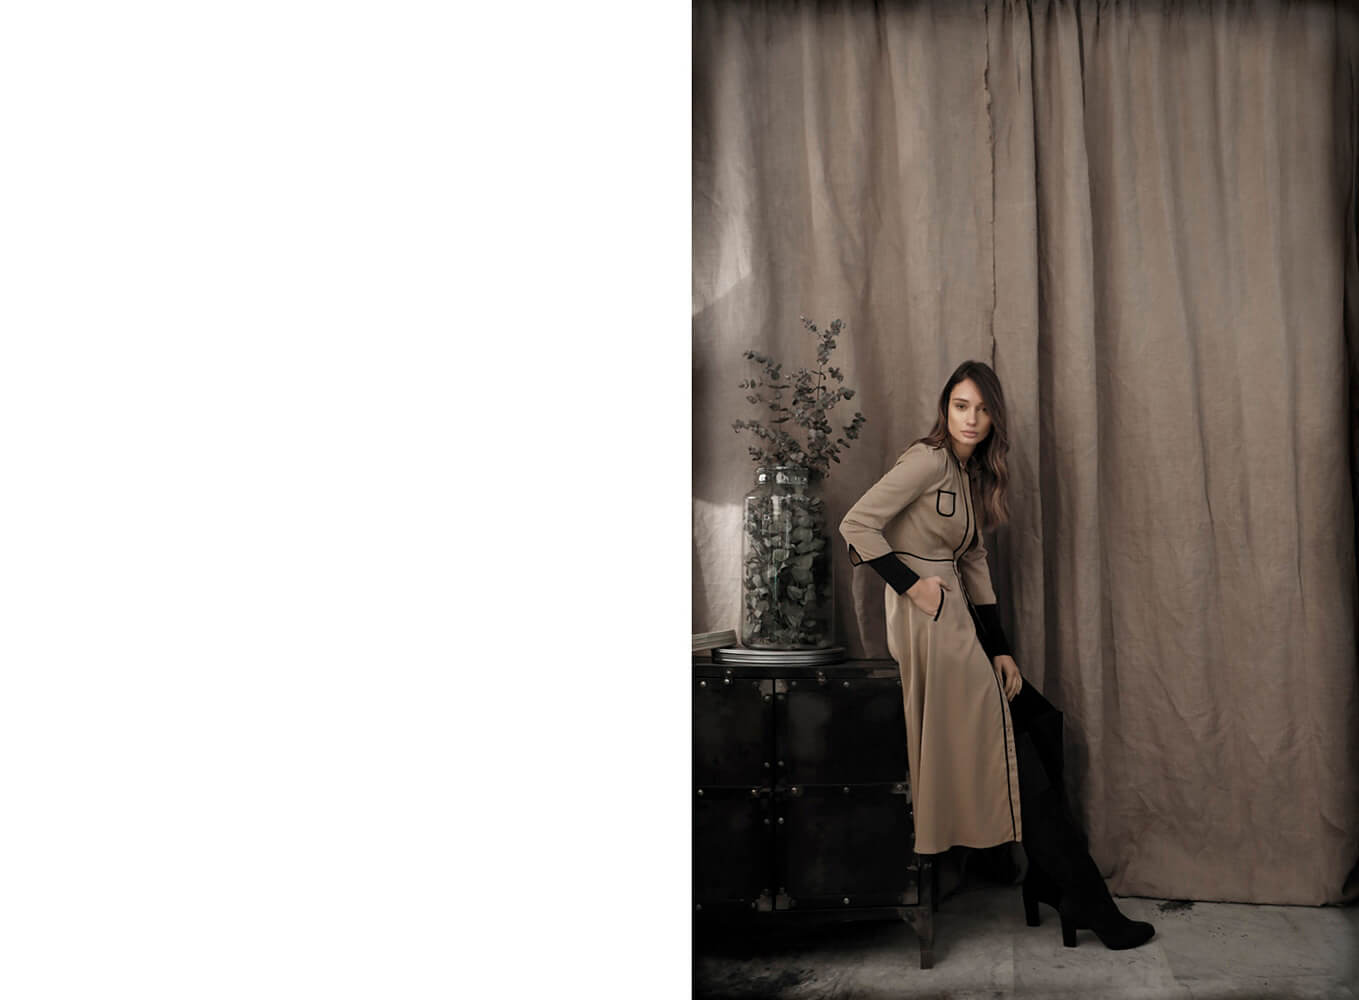 Angel-Ruiz-Ruiz-Fashion-Photographer-Campaign-FW-2017-Archeologie-Dress-1359x1000